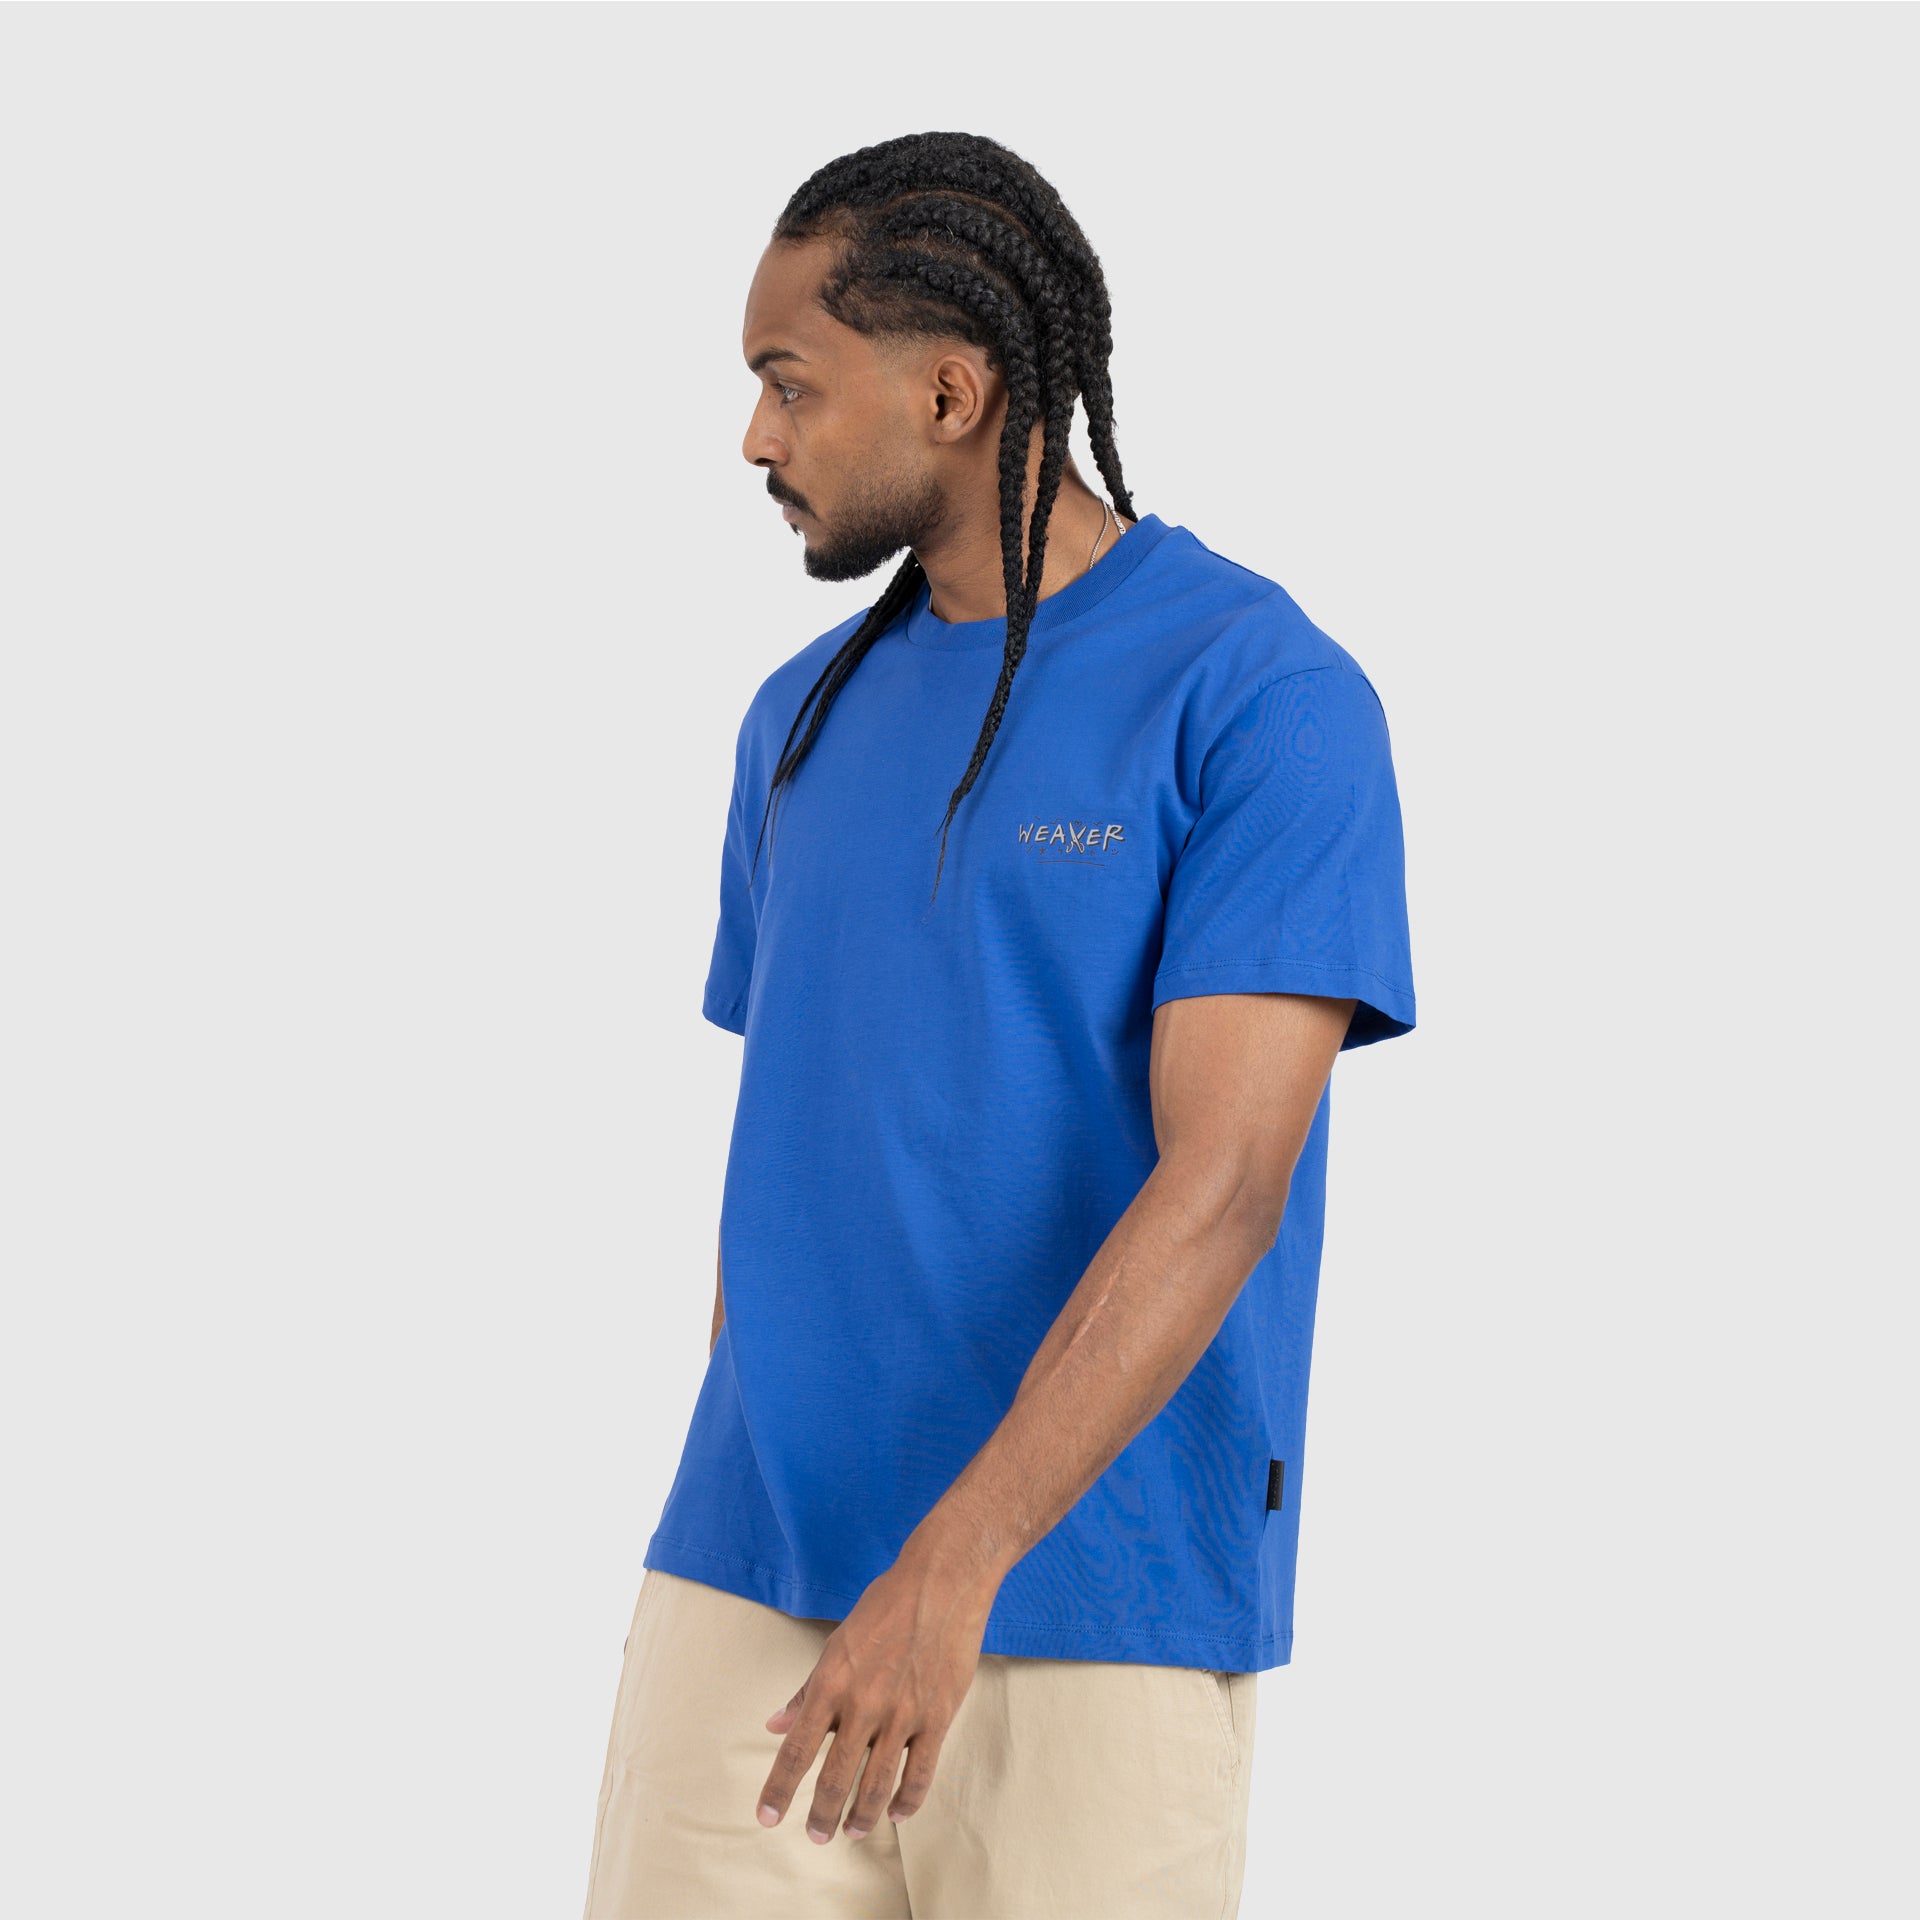 Blue Classic T-Shirt From Weaver Design